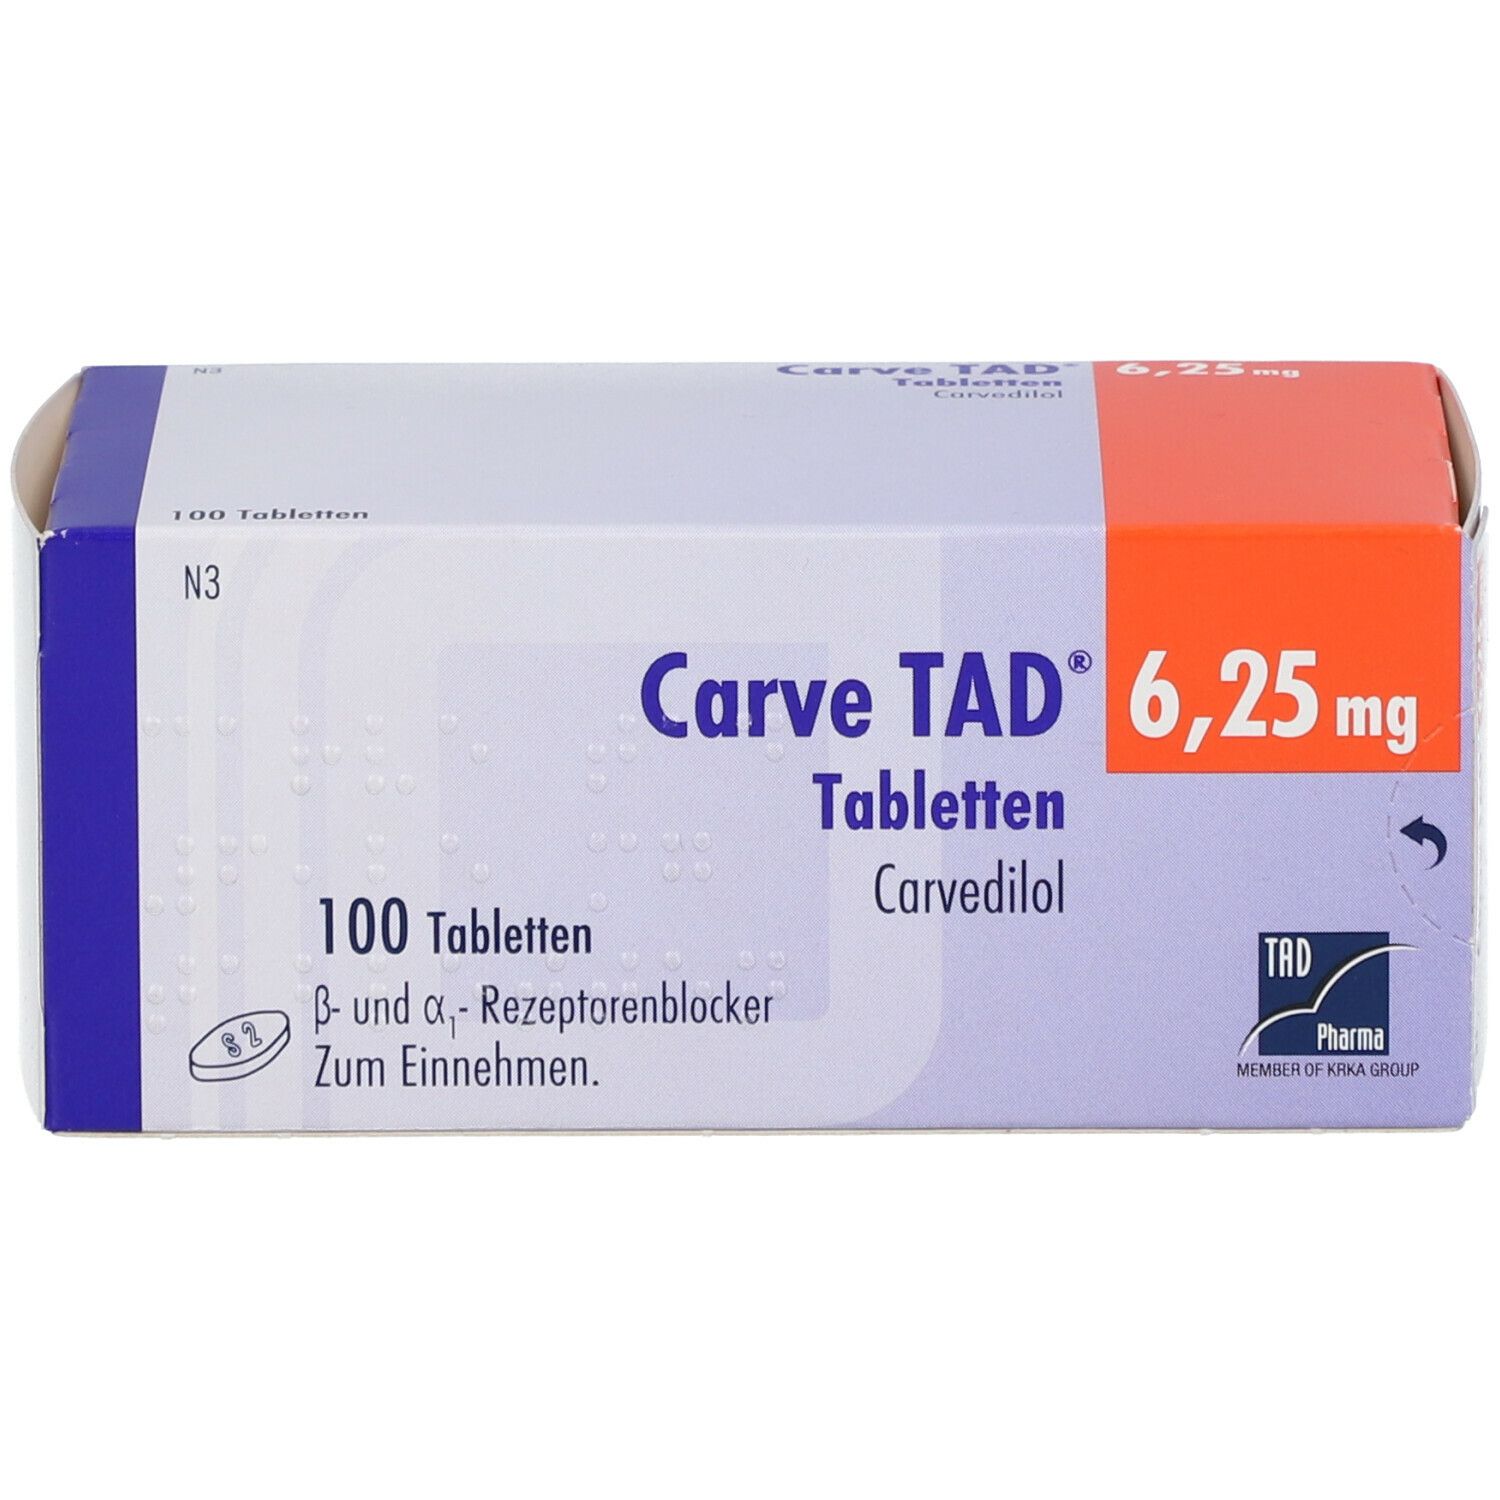 Carve TAD® 6,25 mg